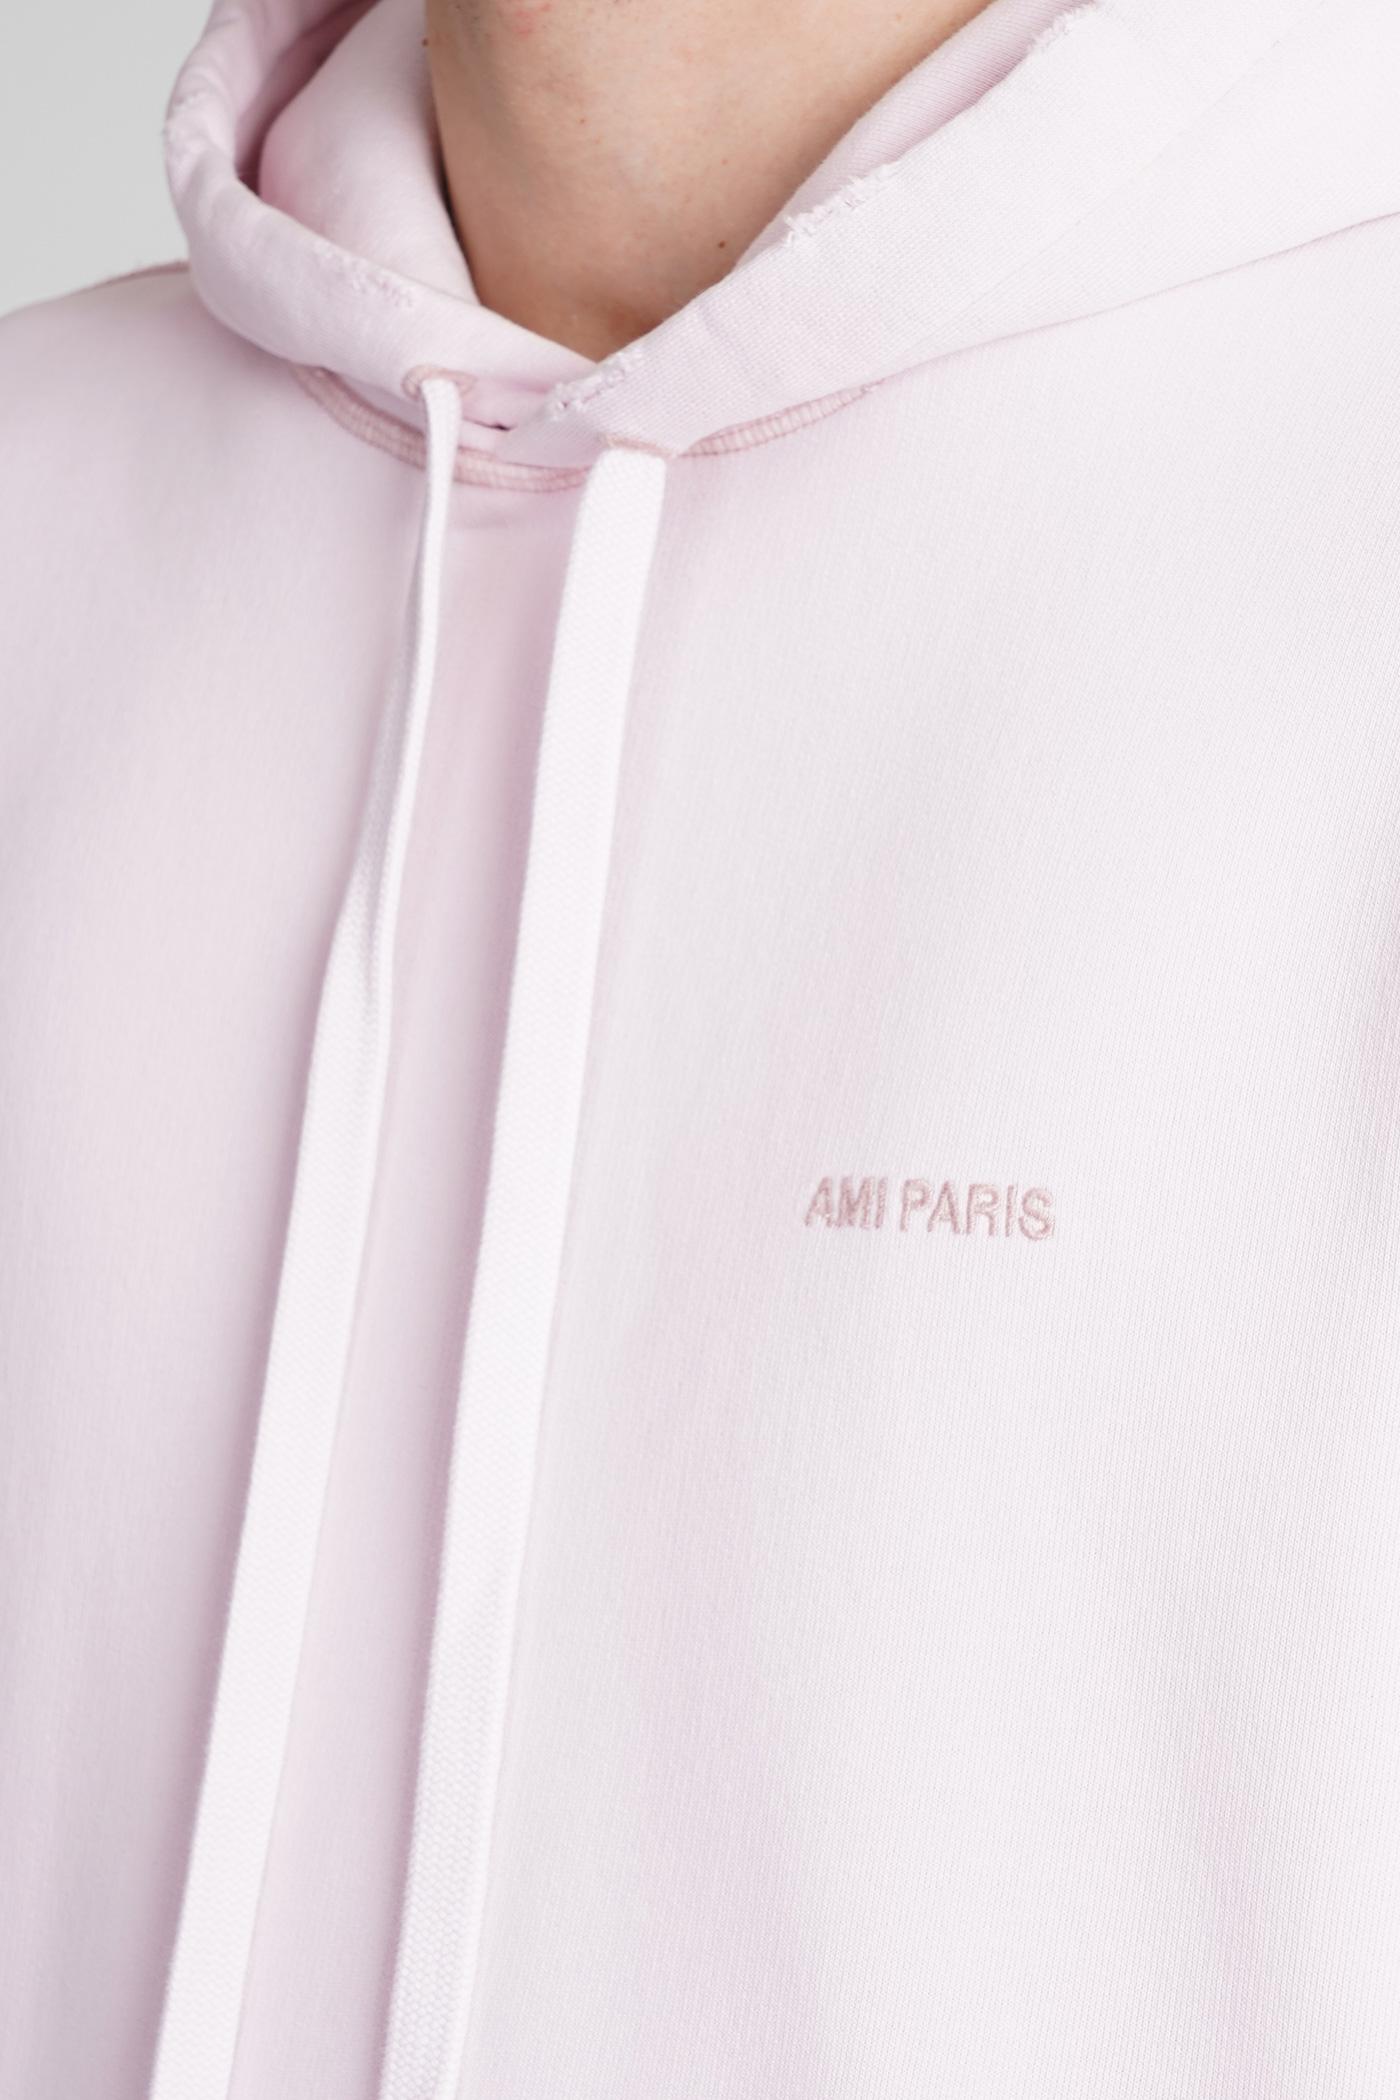 Ami Paris Sweatshirt In Rose-pink Cotton in White for Men | Lyst